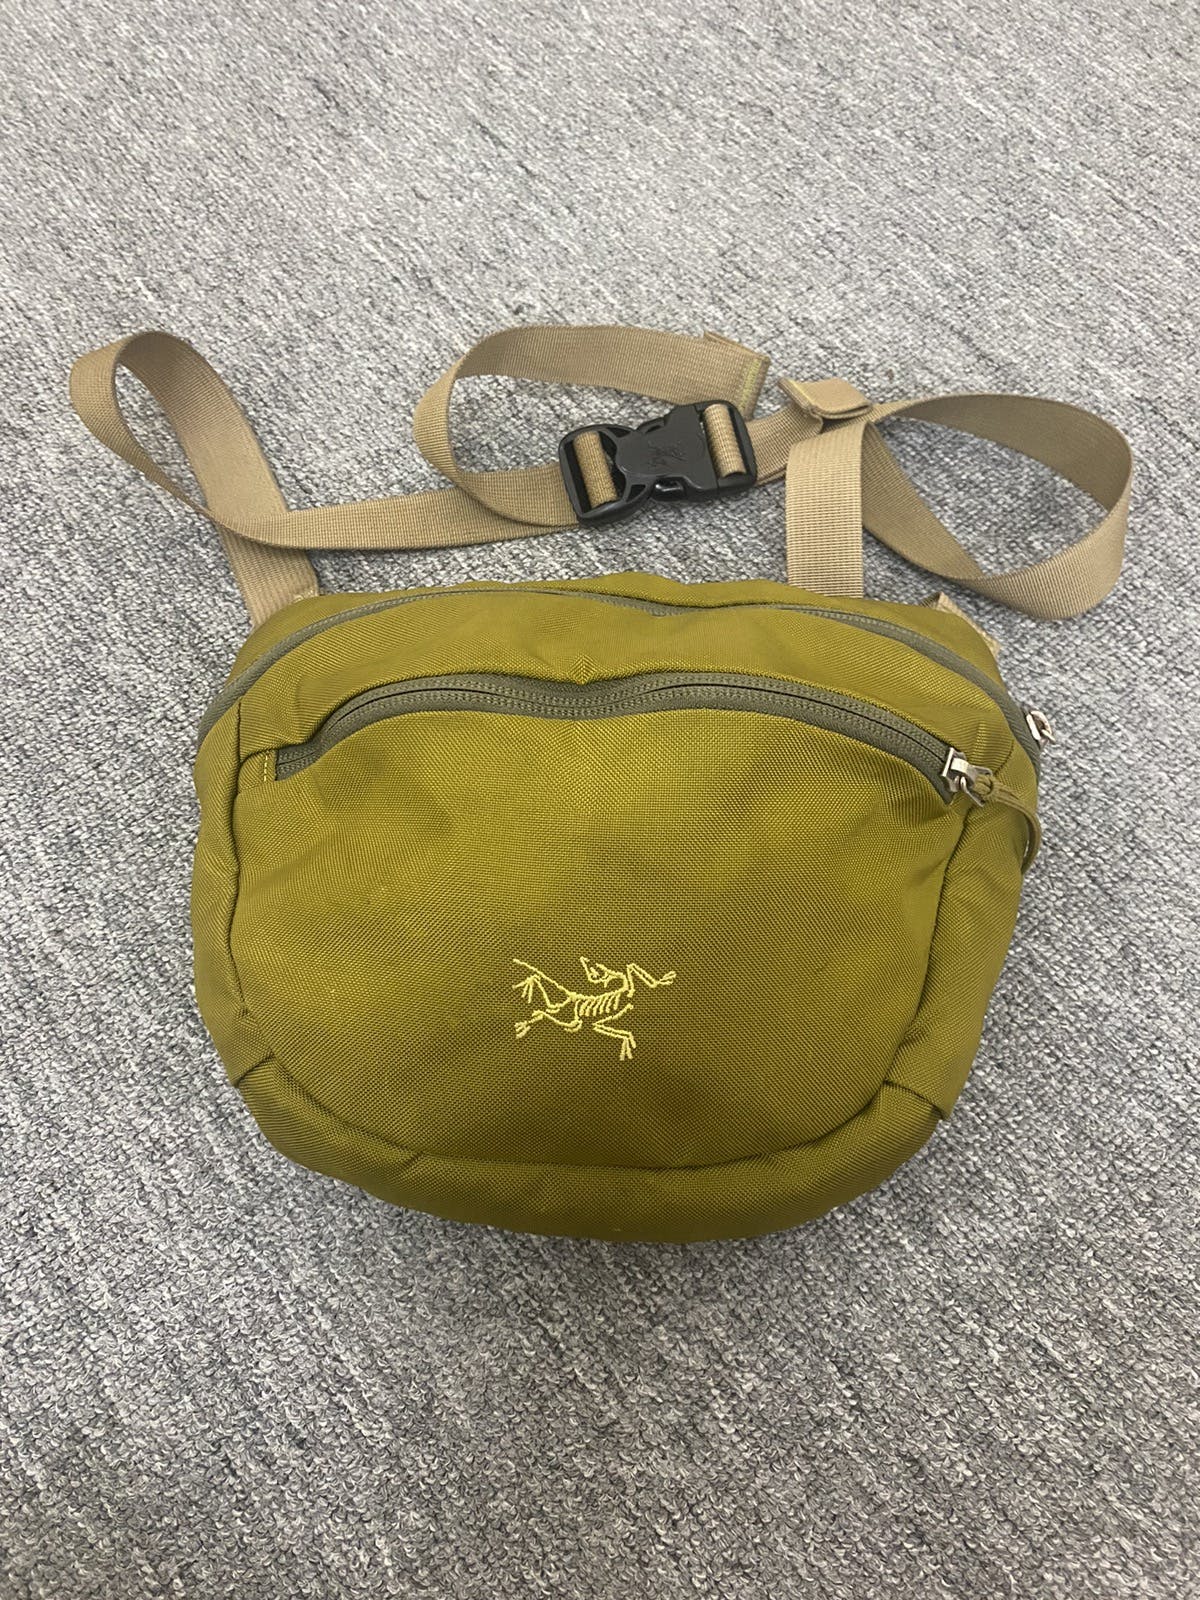 Authentic Arc’teryx Green Army Crossbody Sling Bag - 21